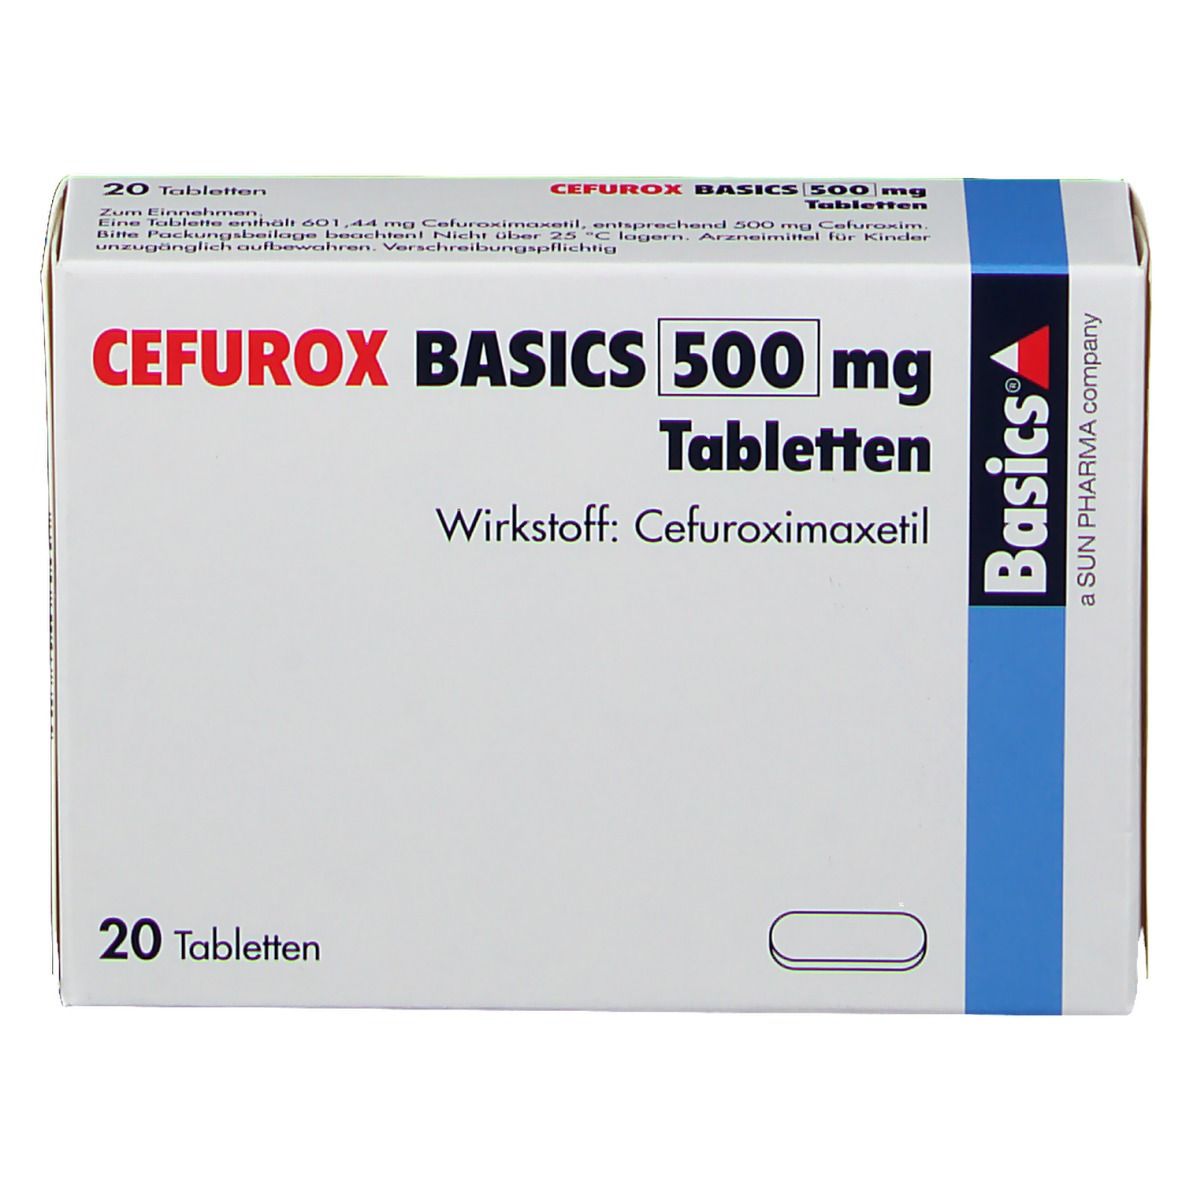 Basics nebenwirkungen cefurox 500 mg CEFUROX BASICS